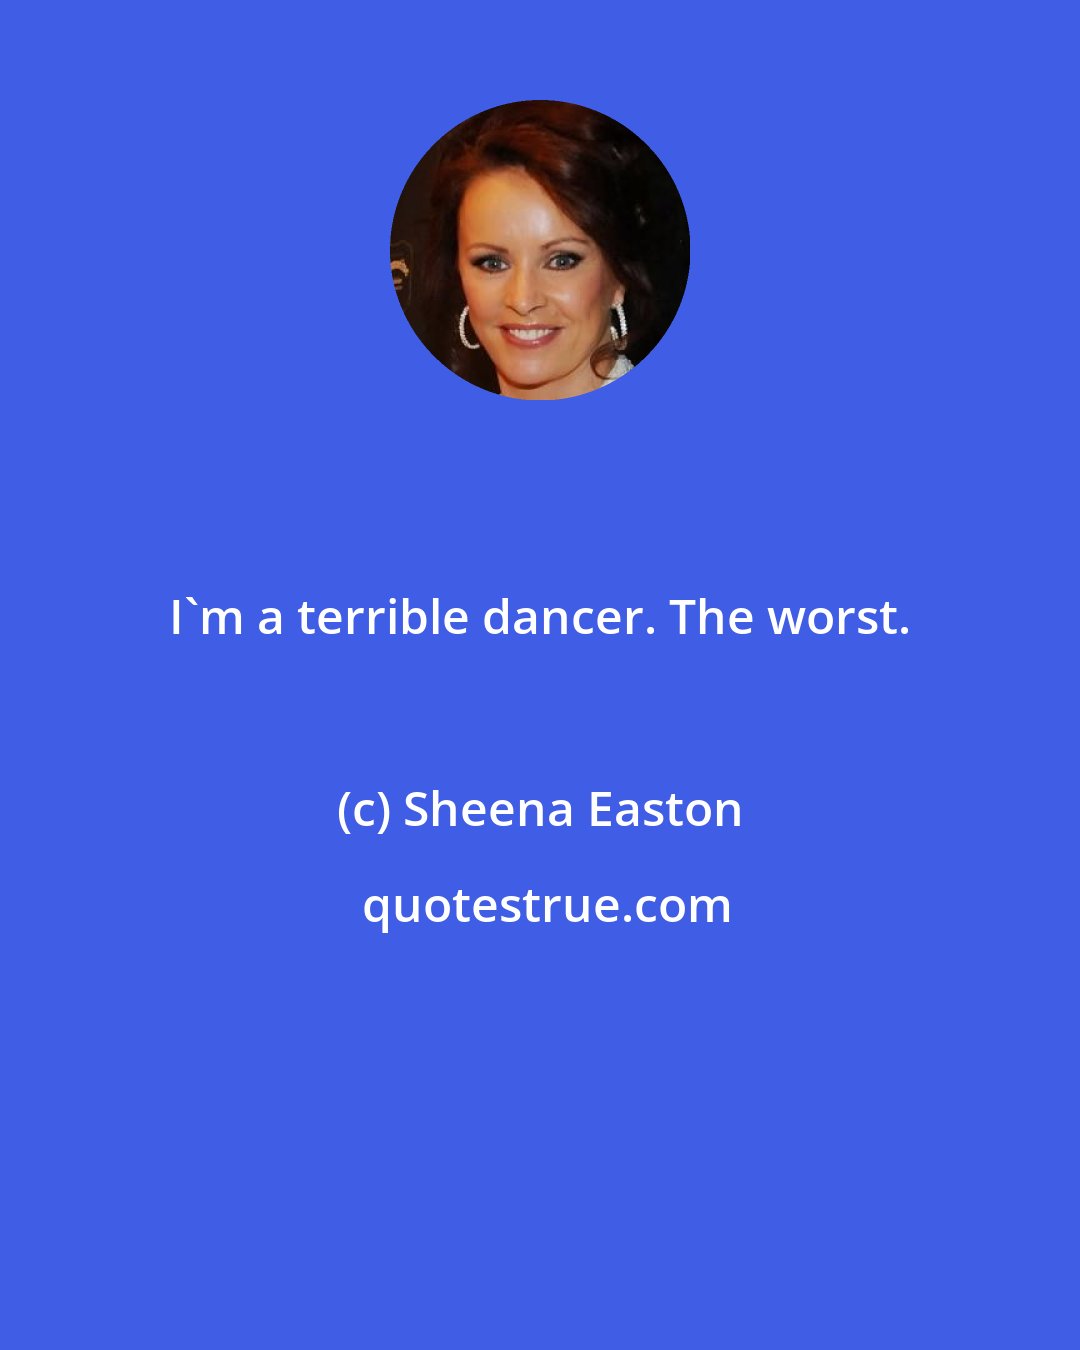 Sheena Easton: I'm a terrible dancer. The worst.